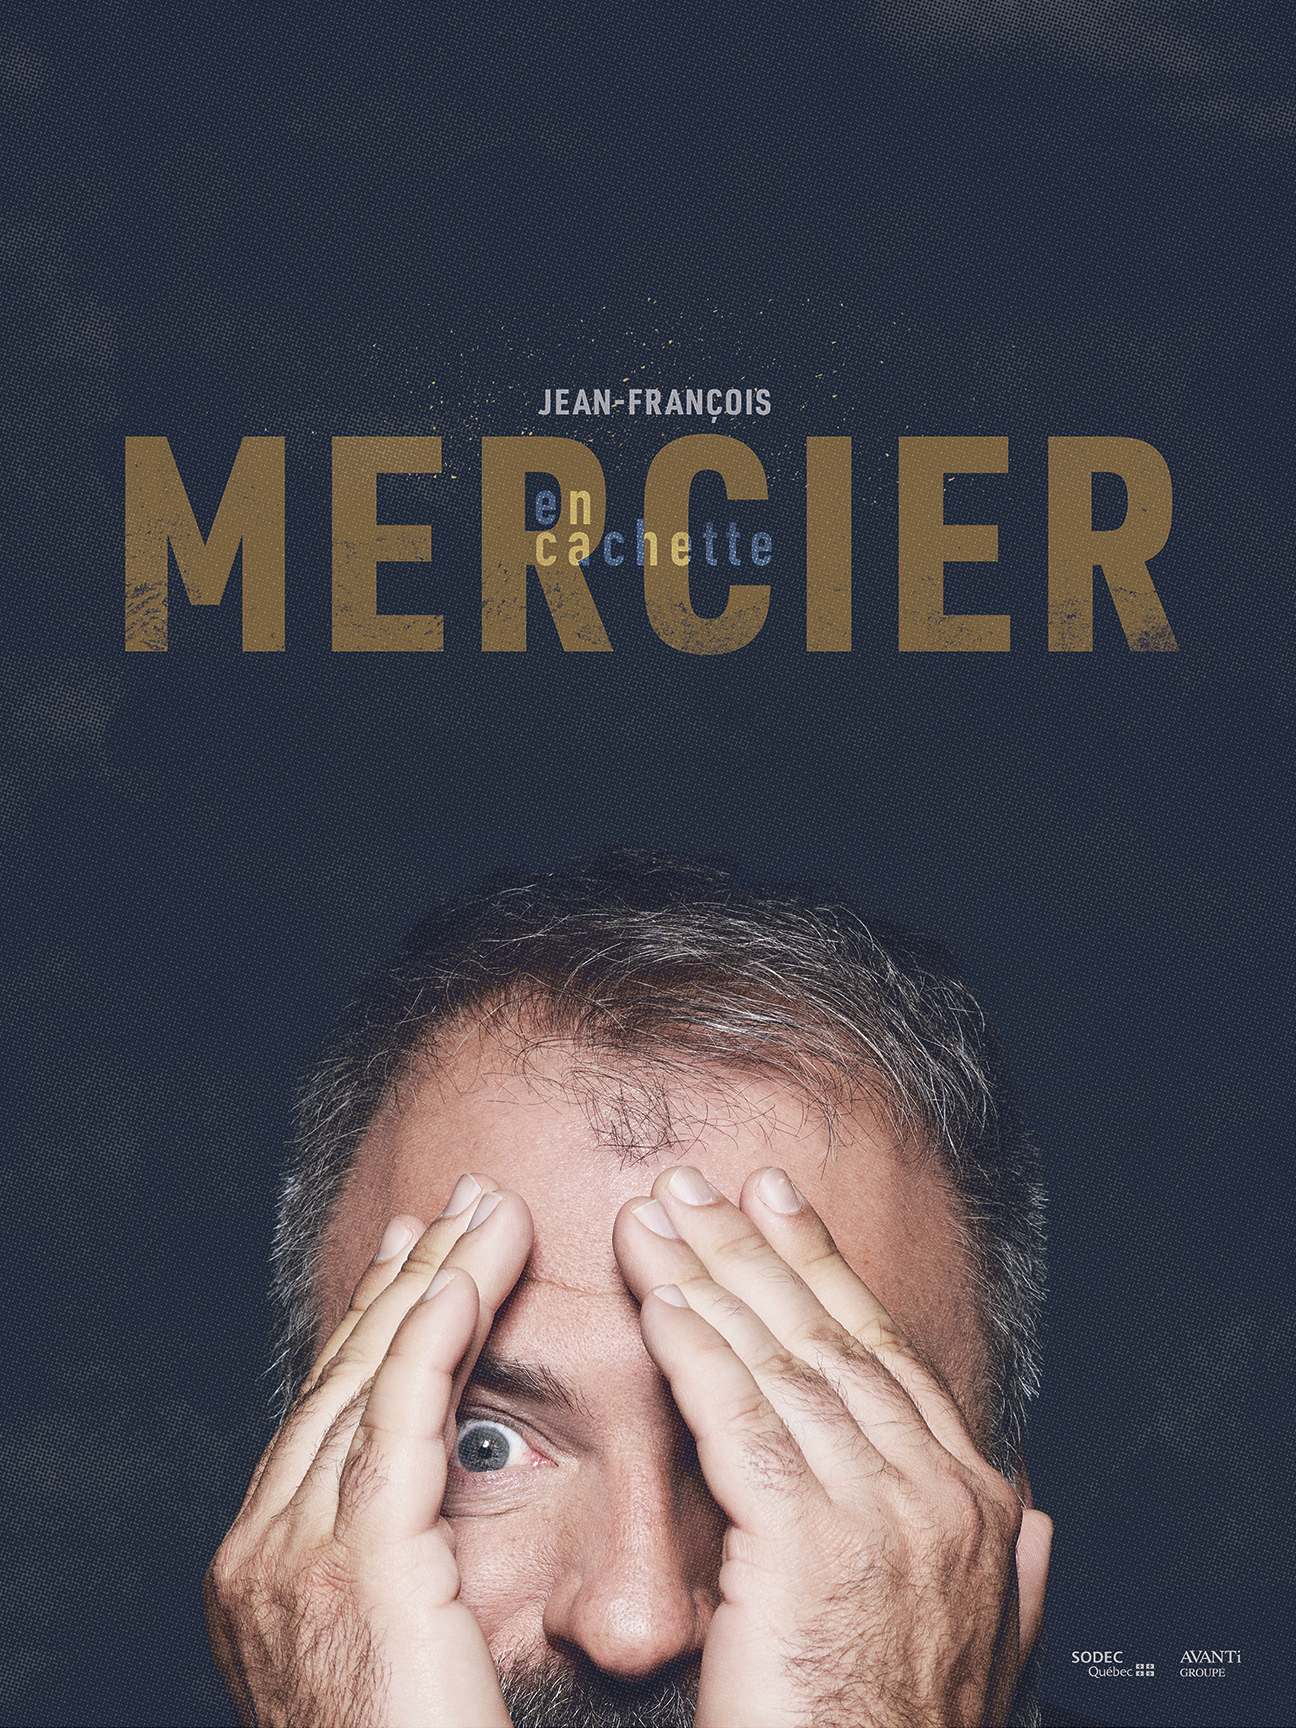 Jean-Francois Mercier - En cachette